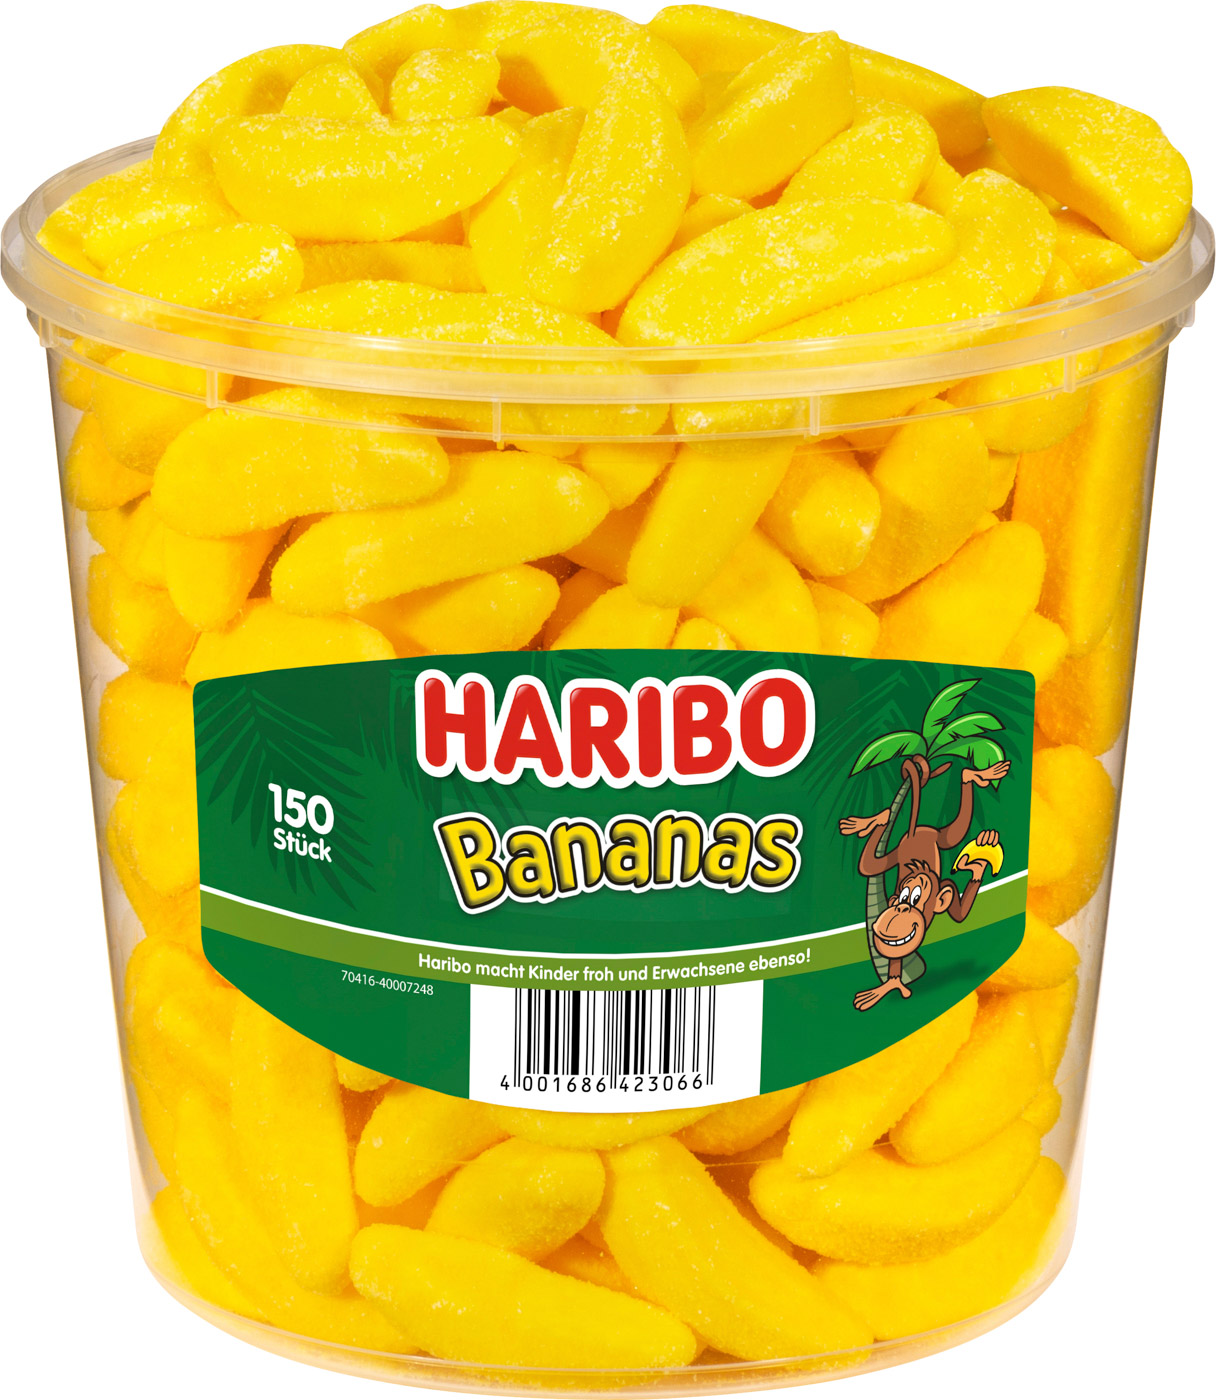 Haribo Bananas 150 Stück